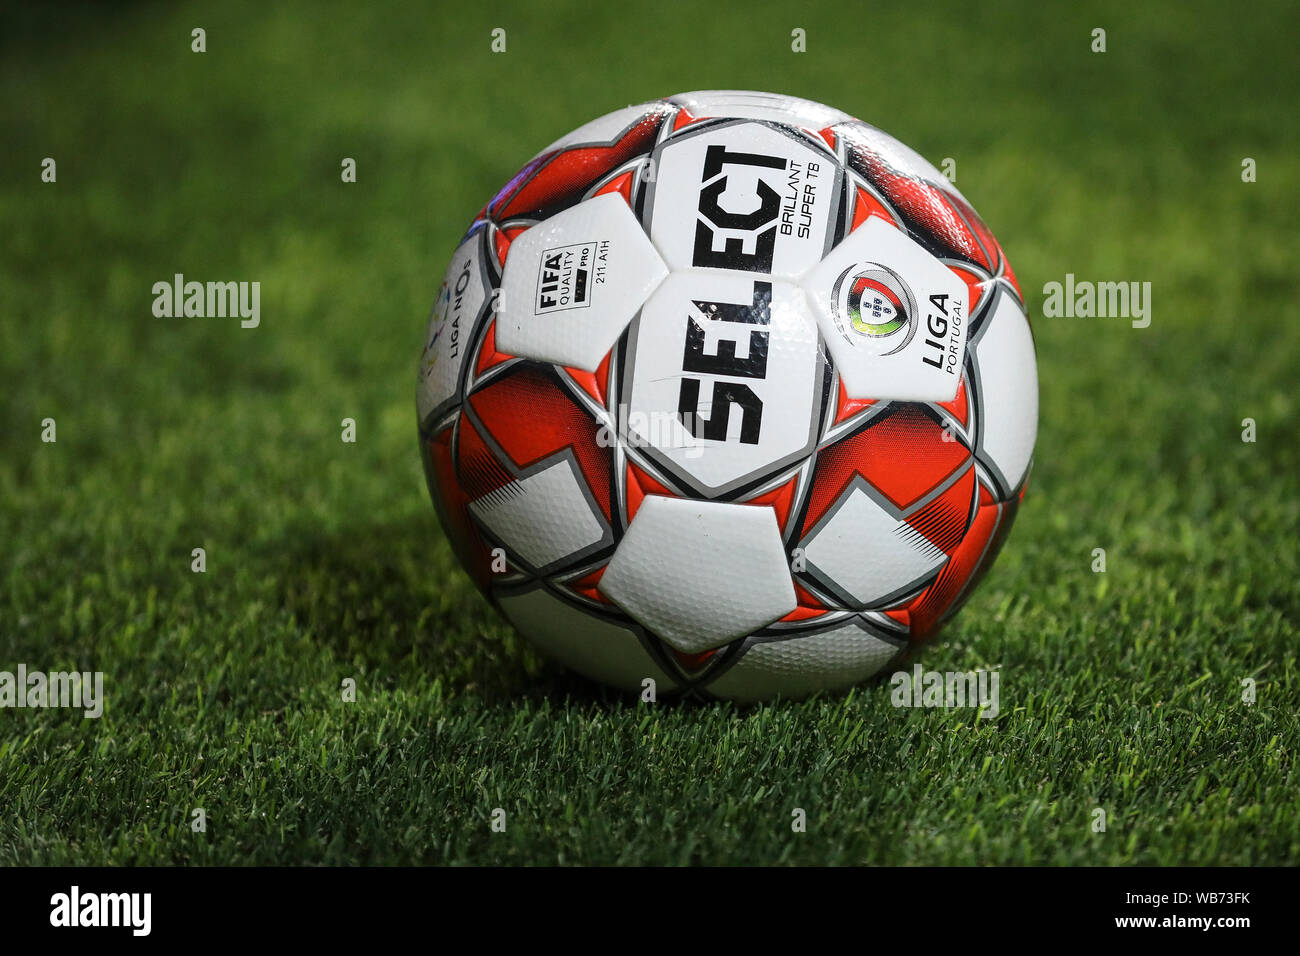 SELECT LIGA PORTUGAL 2022 BRILLANT SUPERTB (FIFA) 2022 SOCCER BALL